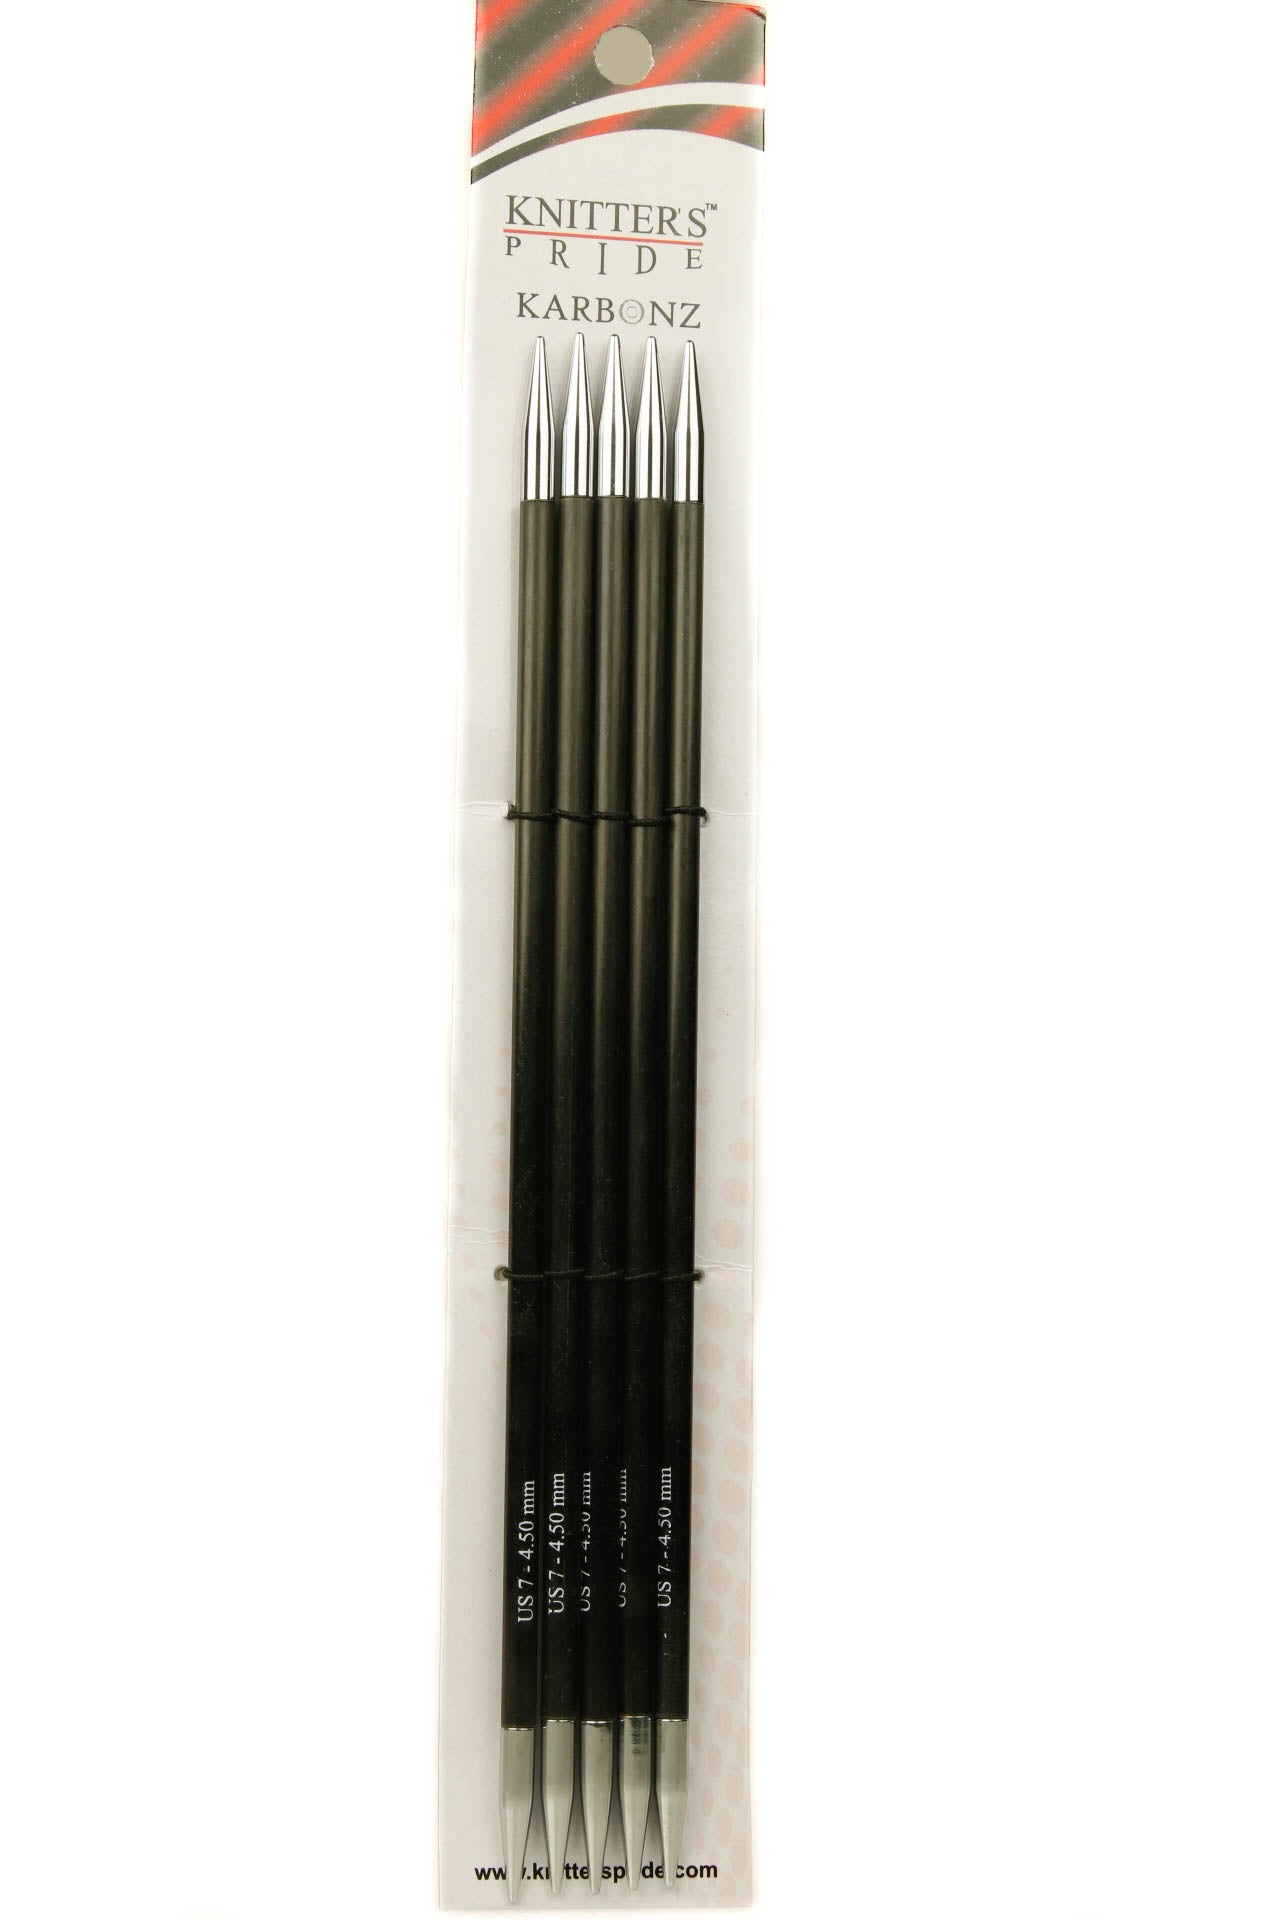 Karbonz Double Pointed Needles Set